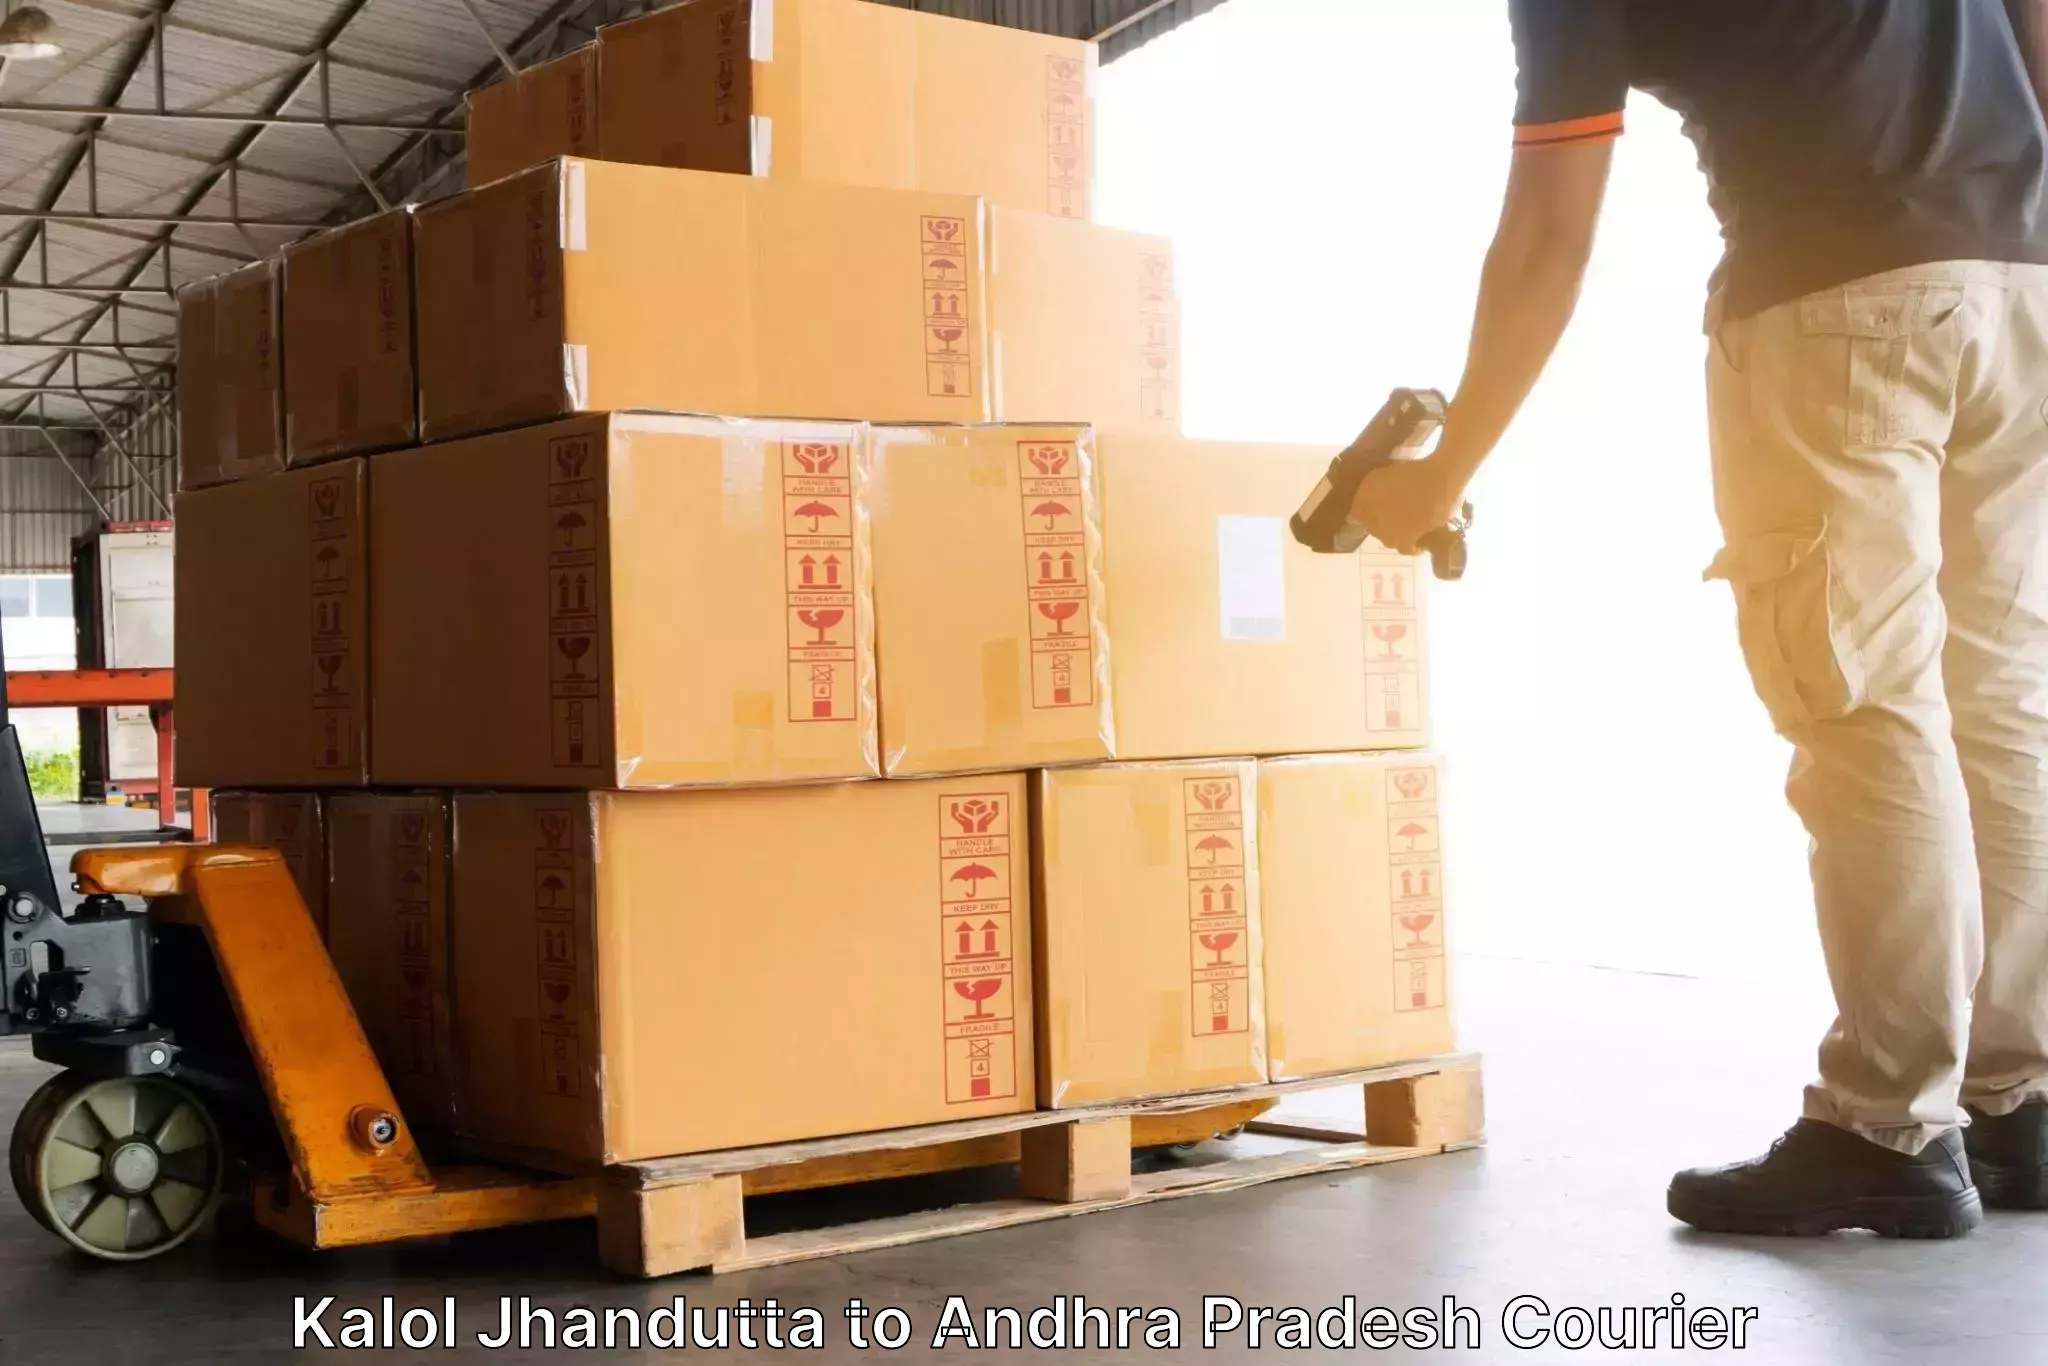 Flexible delivery schedules Kalol Jhandutta to Punganur